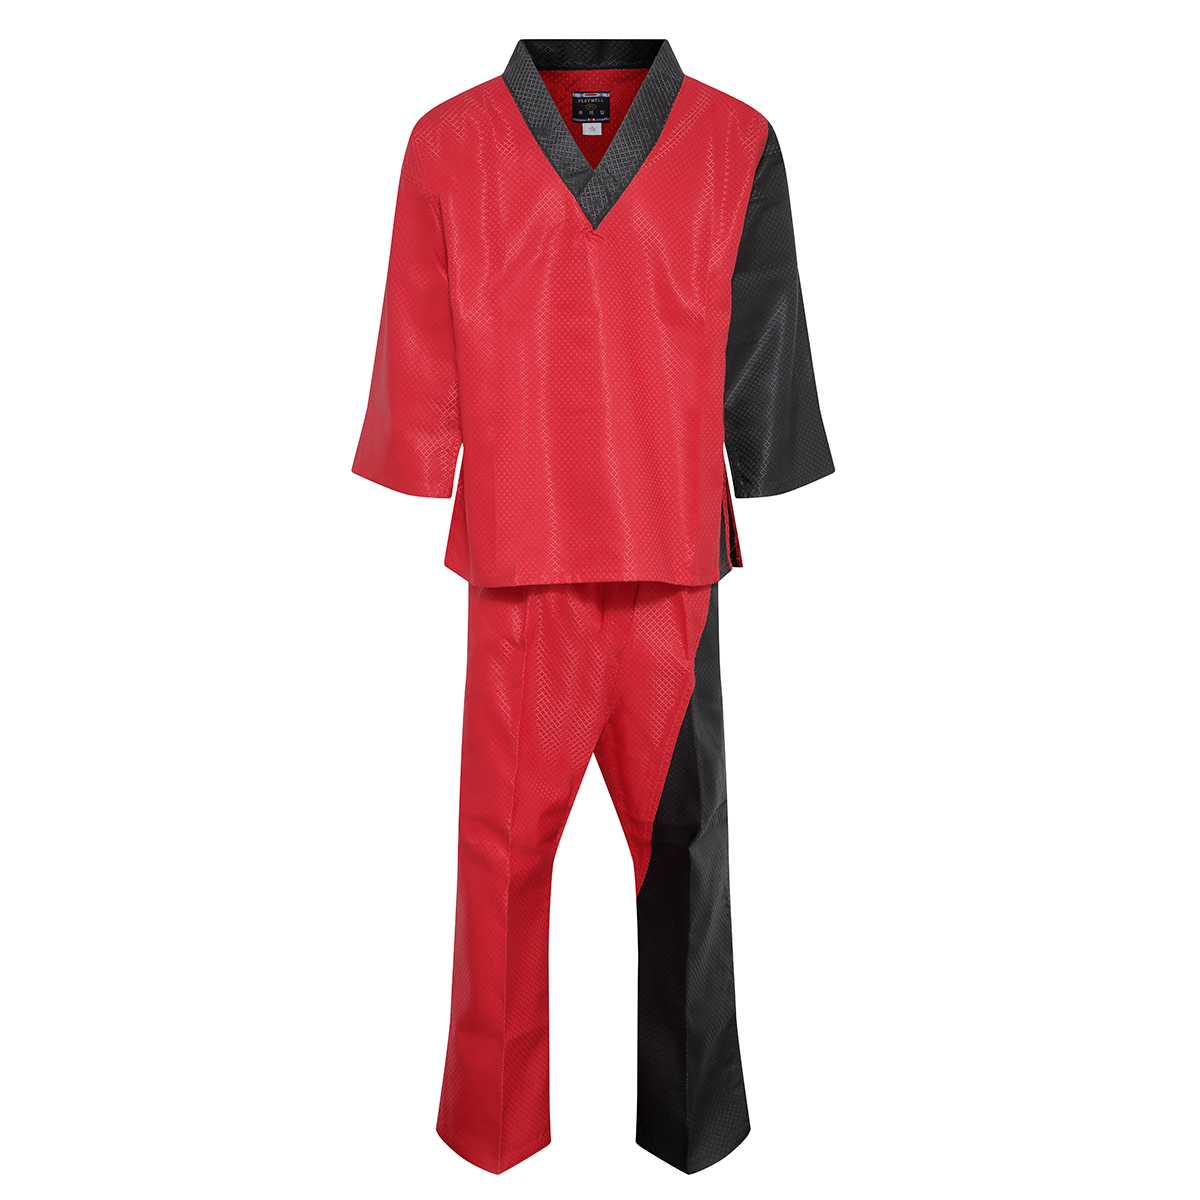 Elite Splice V-Neck Team Uniform - Red/Black - Click Image to Close